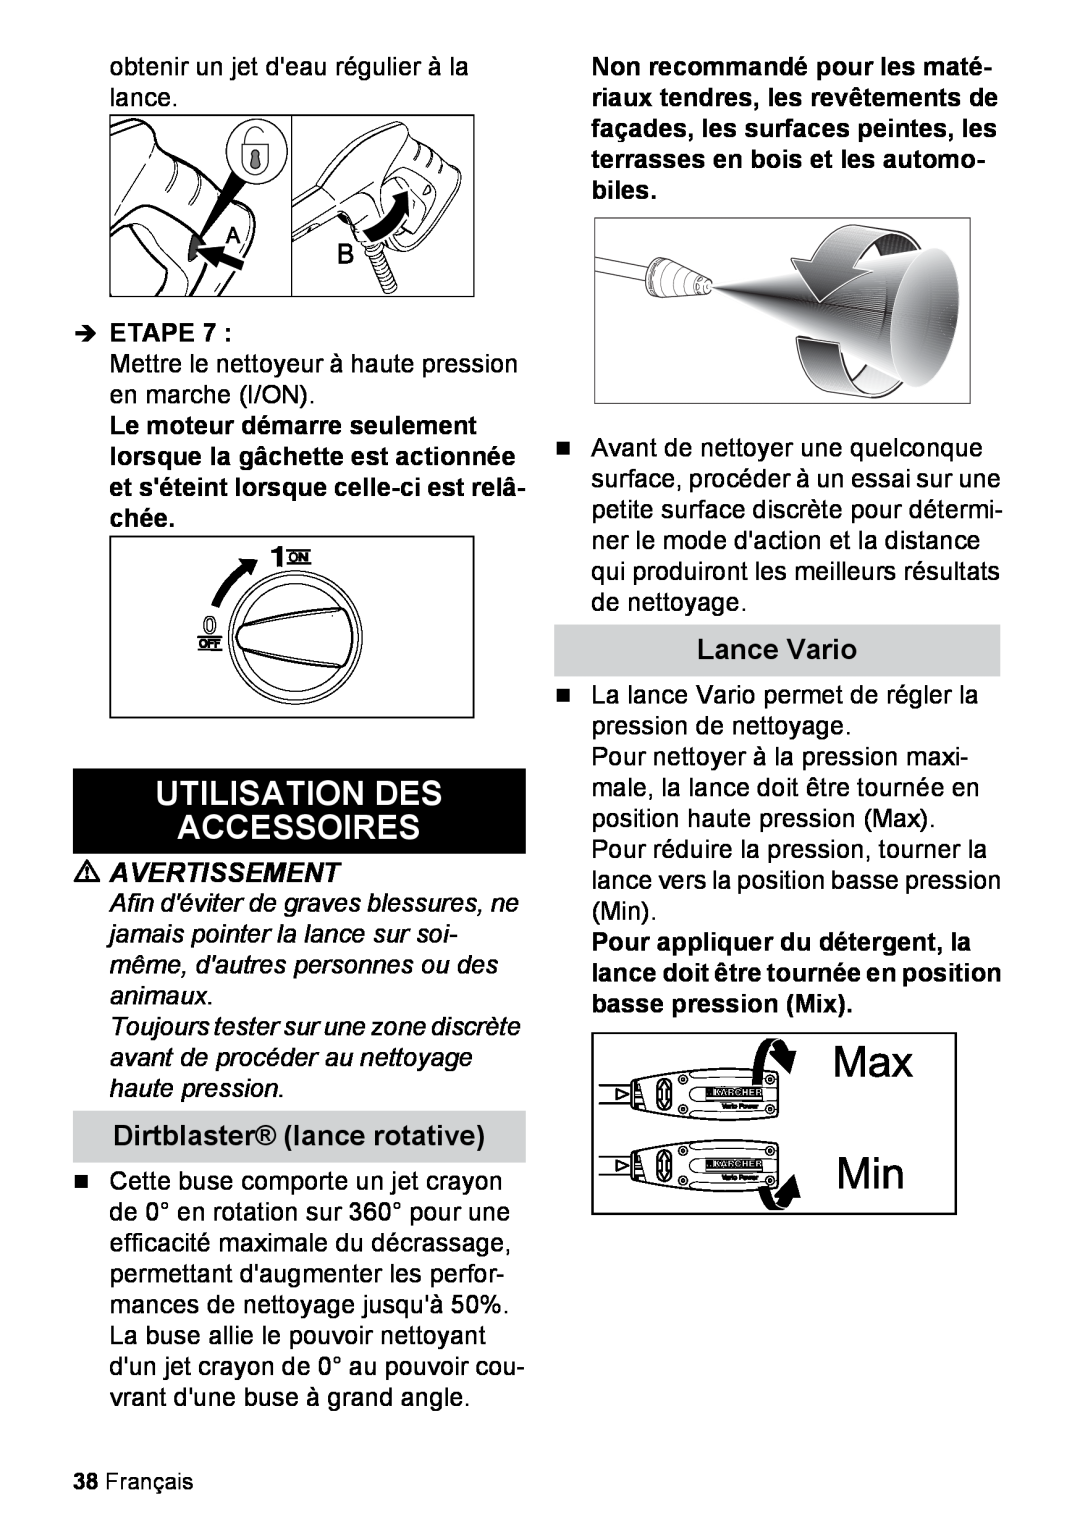 Karcher K 2.425 manual Utilisation Des Accessoires, Dirtblaster lance rotative, Lance Vario, Avertissement 